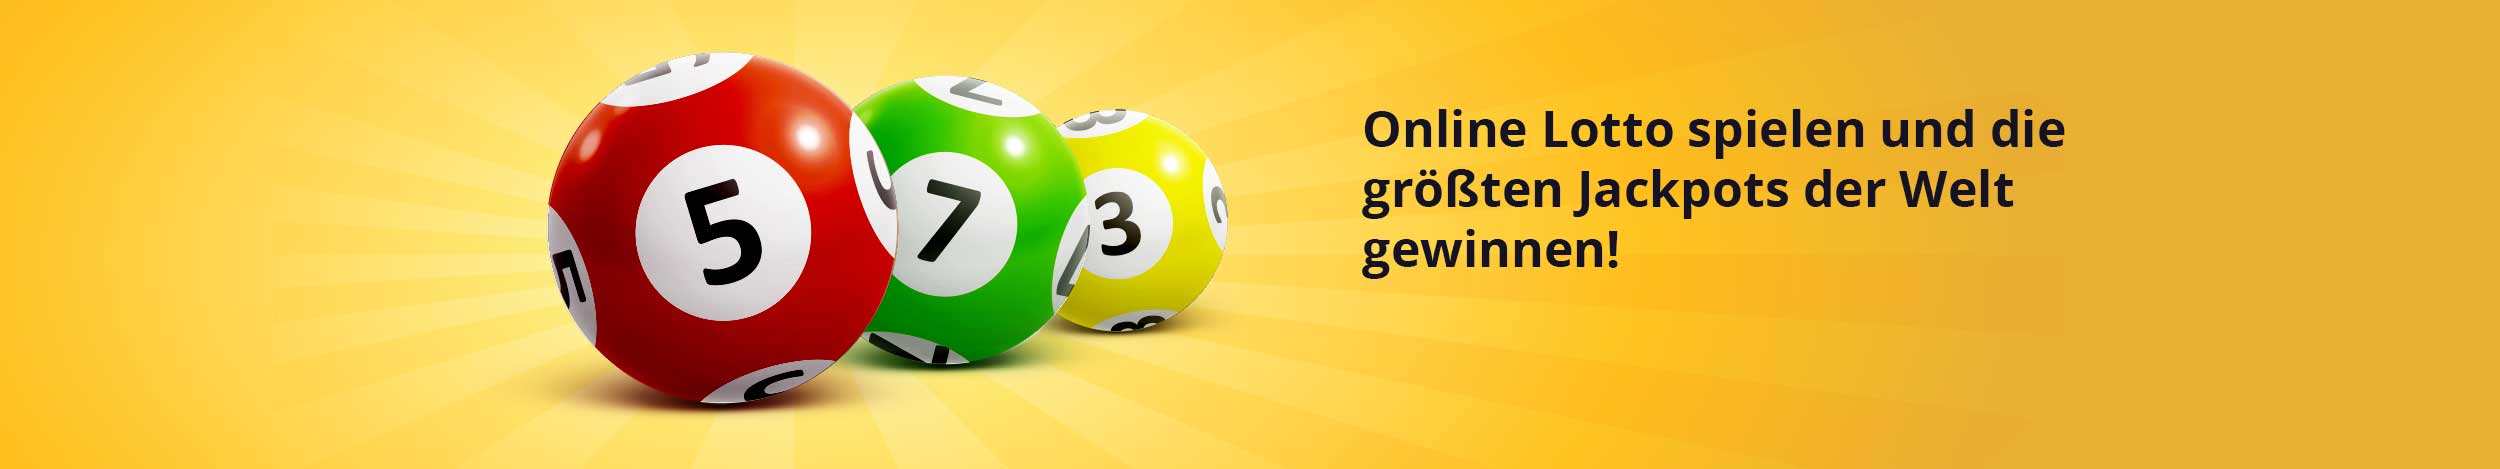 Online Lotto Anbieter